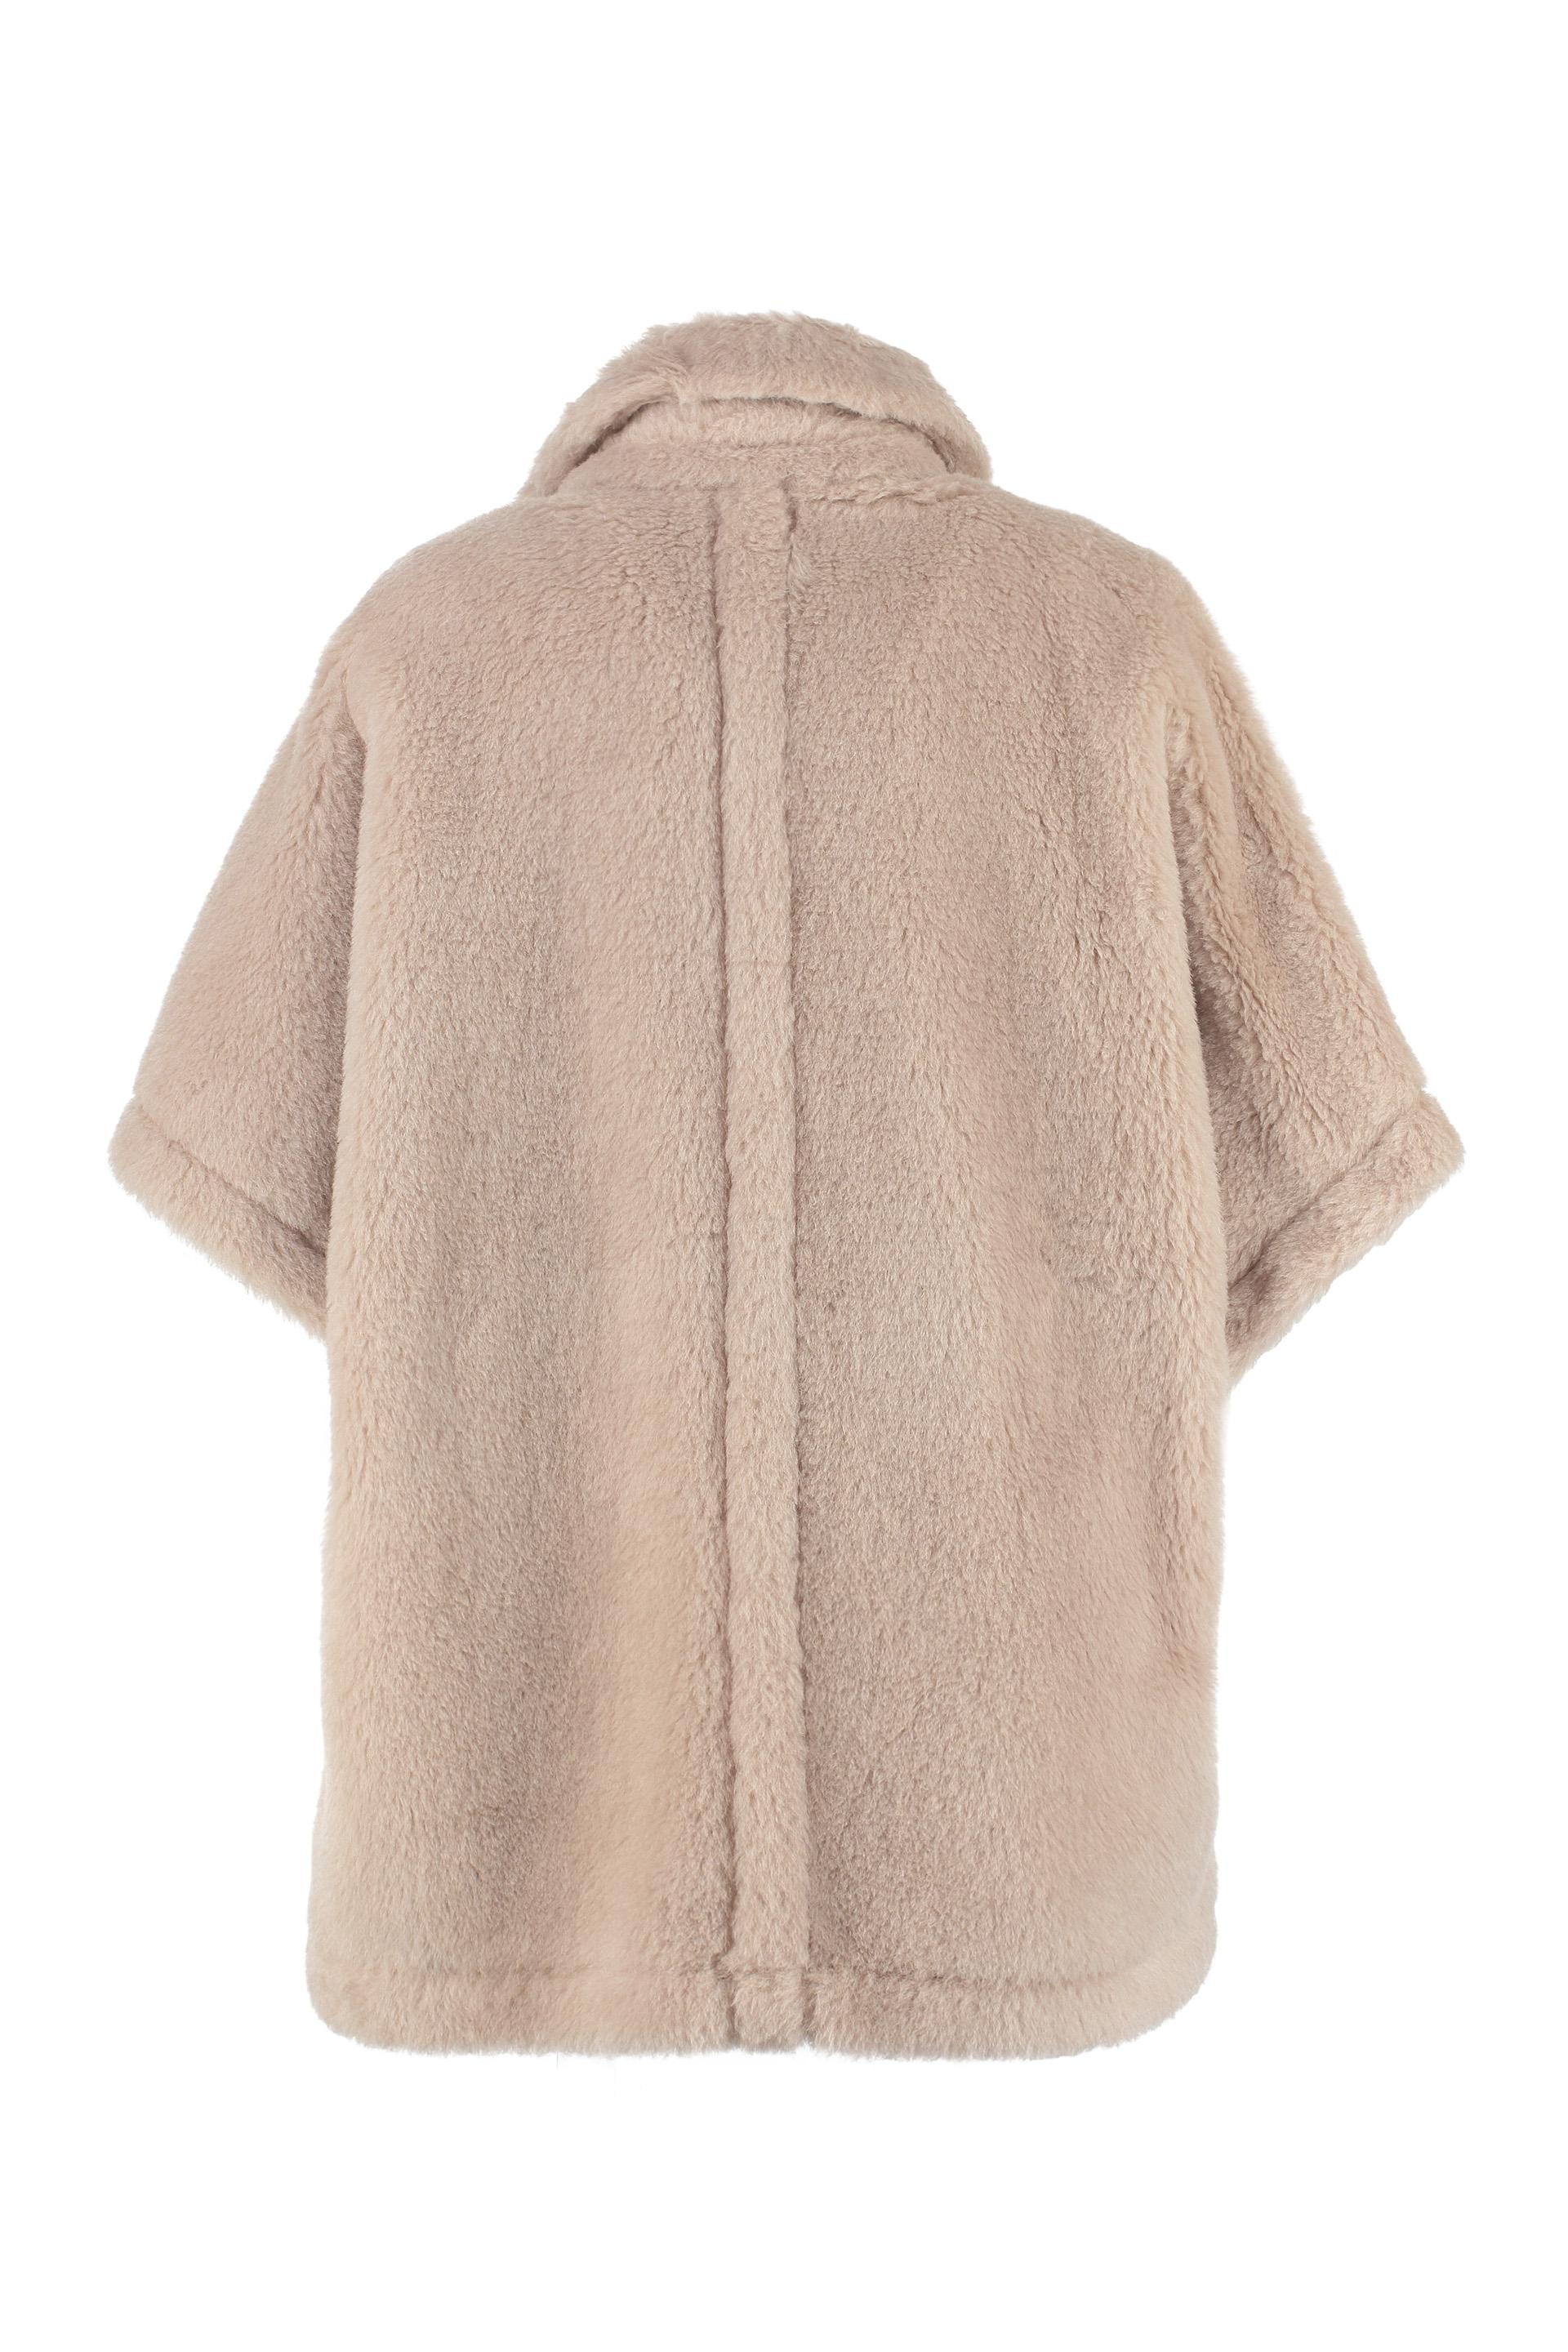 Max Mara Synthetic Manco Faux Fur Cape Coat in Beige (Natural) | Lyst